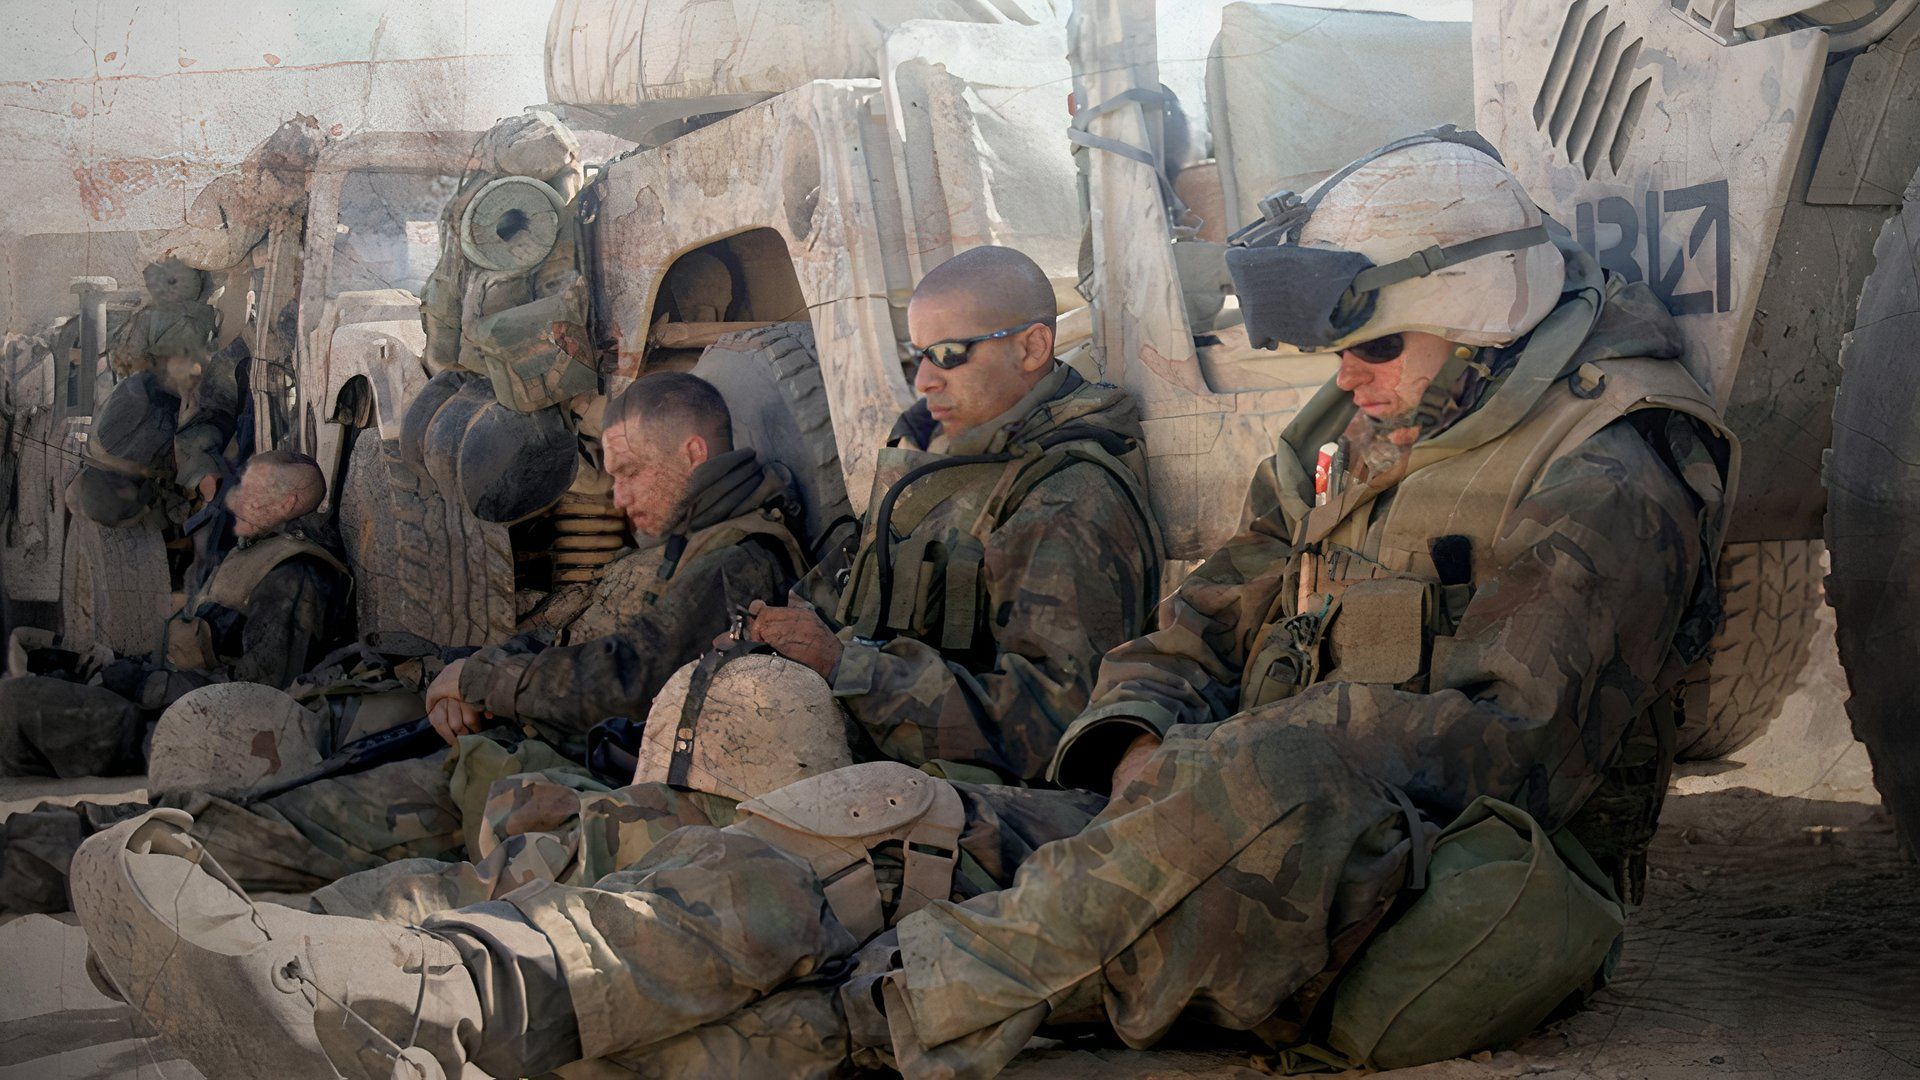 The Marines sit injured in Generation Kill